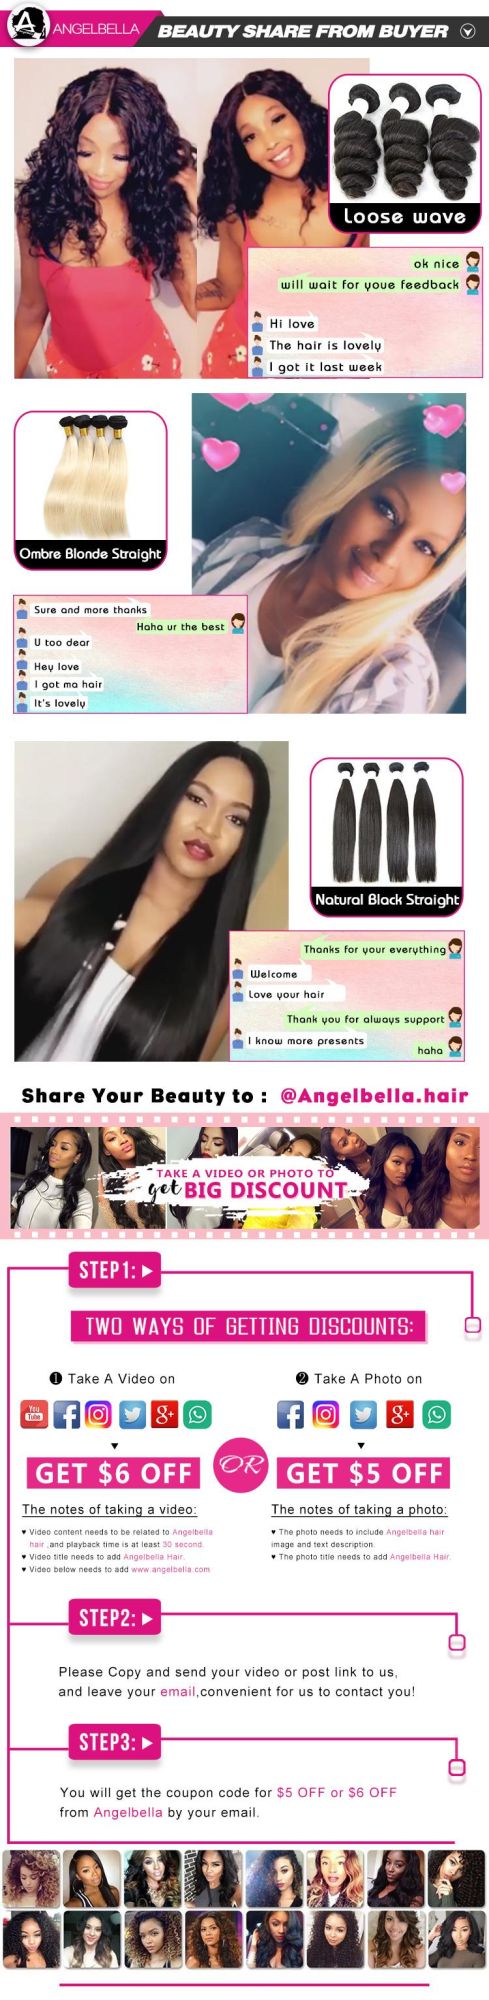 Angelbella New Design Virgin Remy Hair Bundles Loose Wave Funmi 33# Hair Weaving